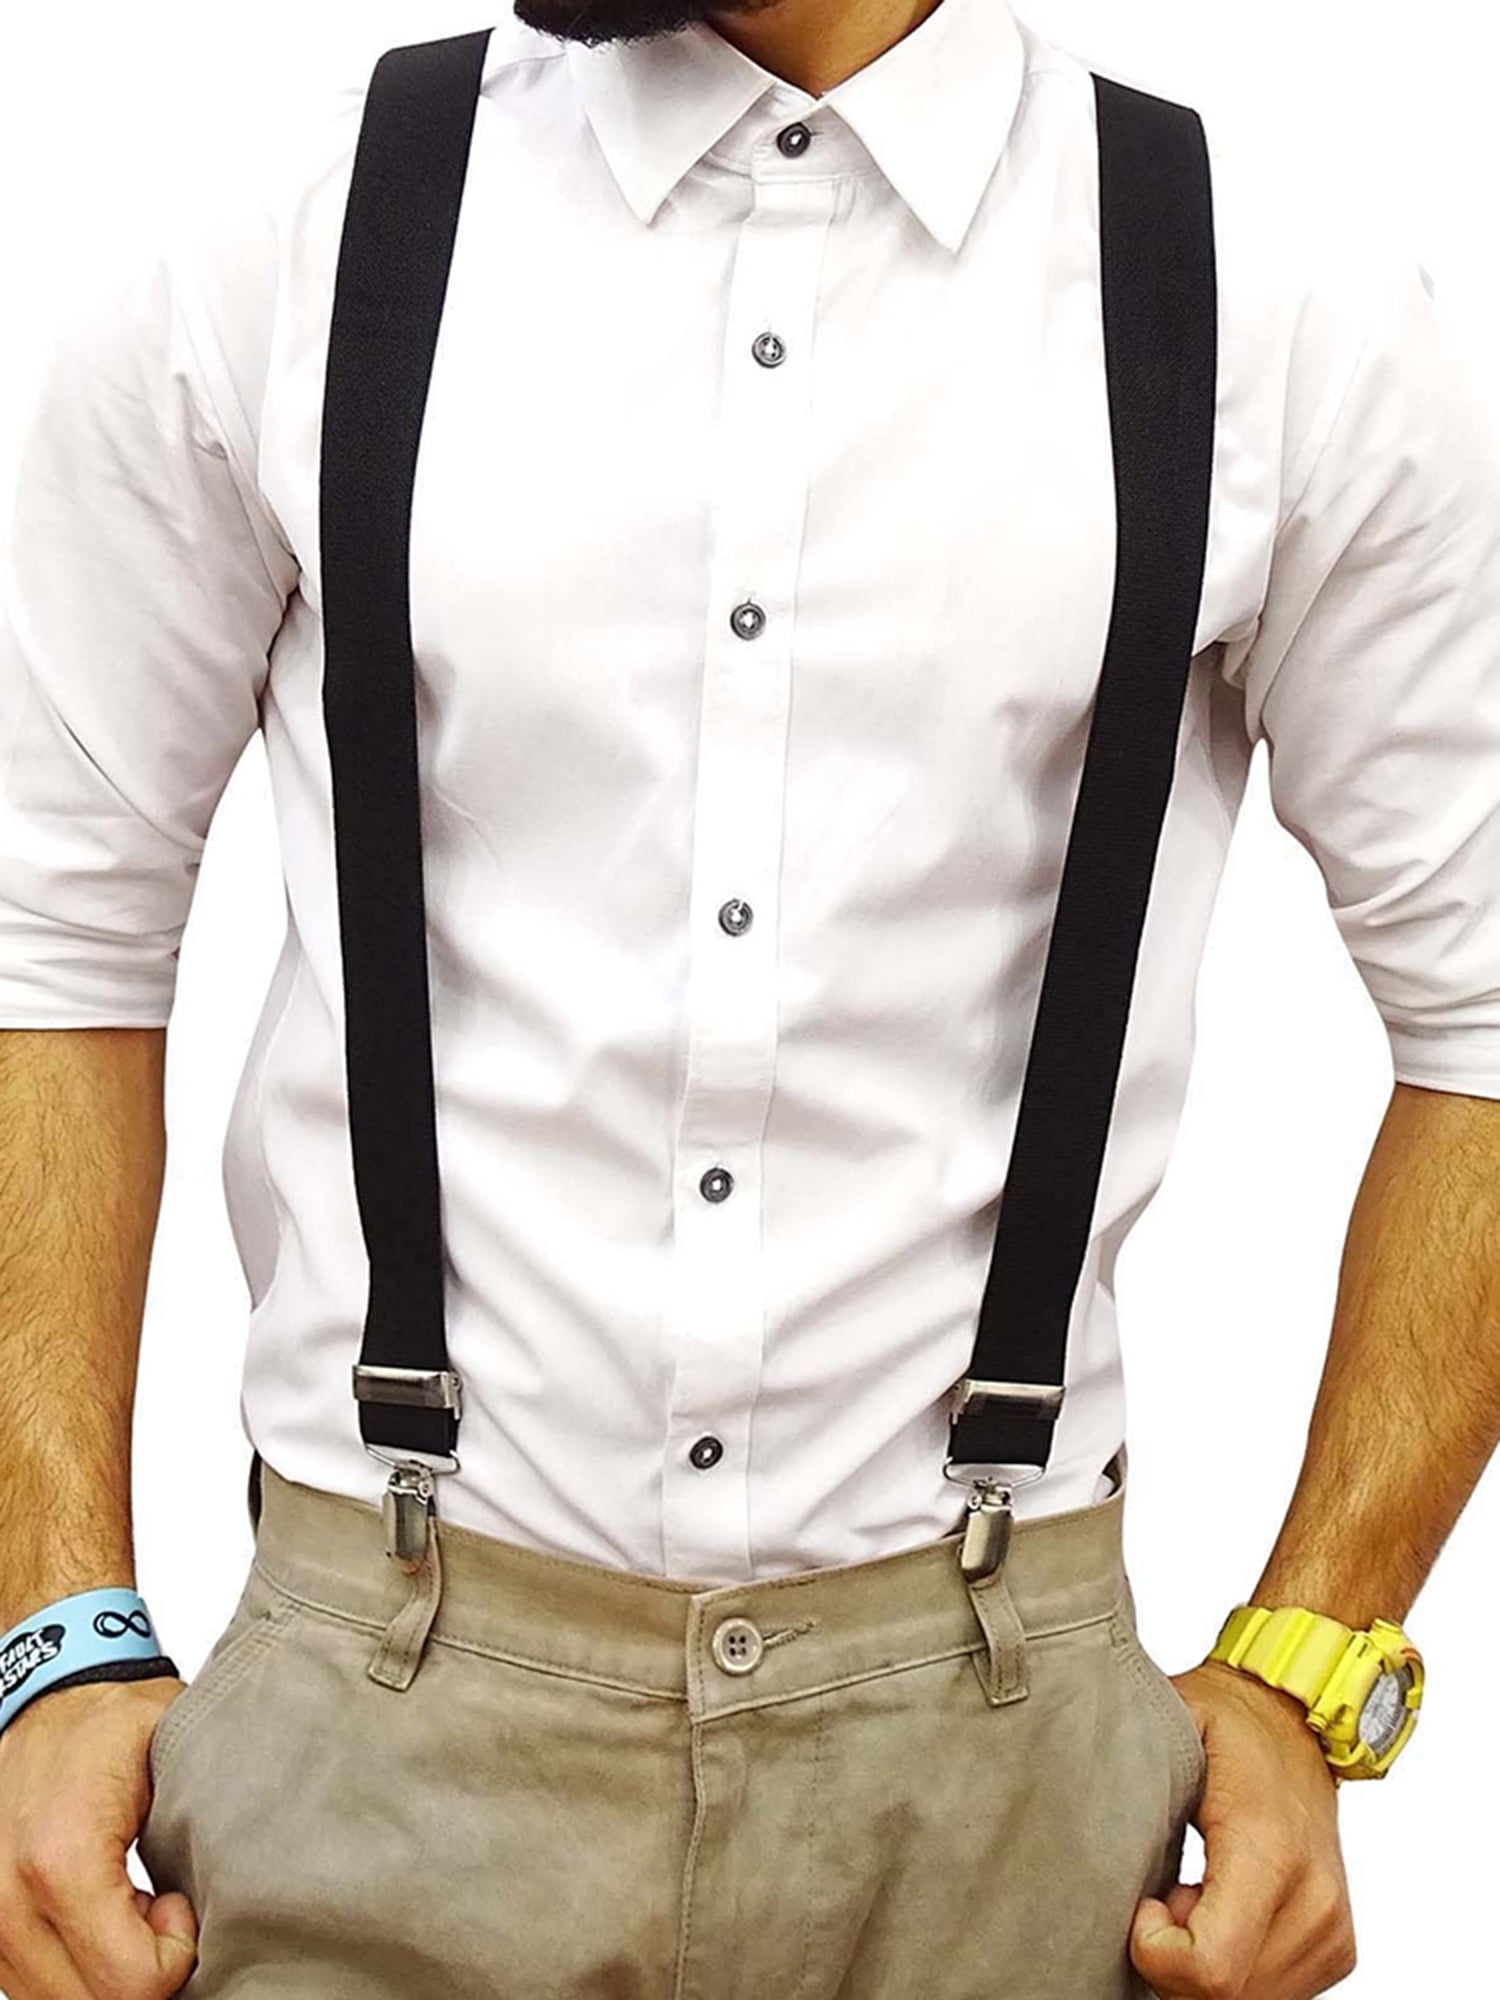 Mens 3.5 cm Button on Y-Shaped Adjustable Coloured Trouser Braces Suspenders 